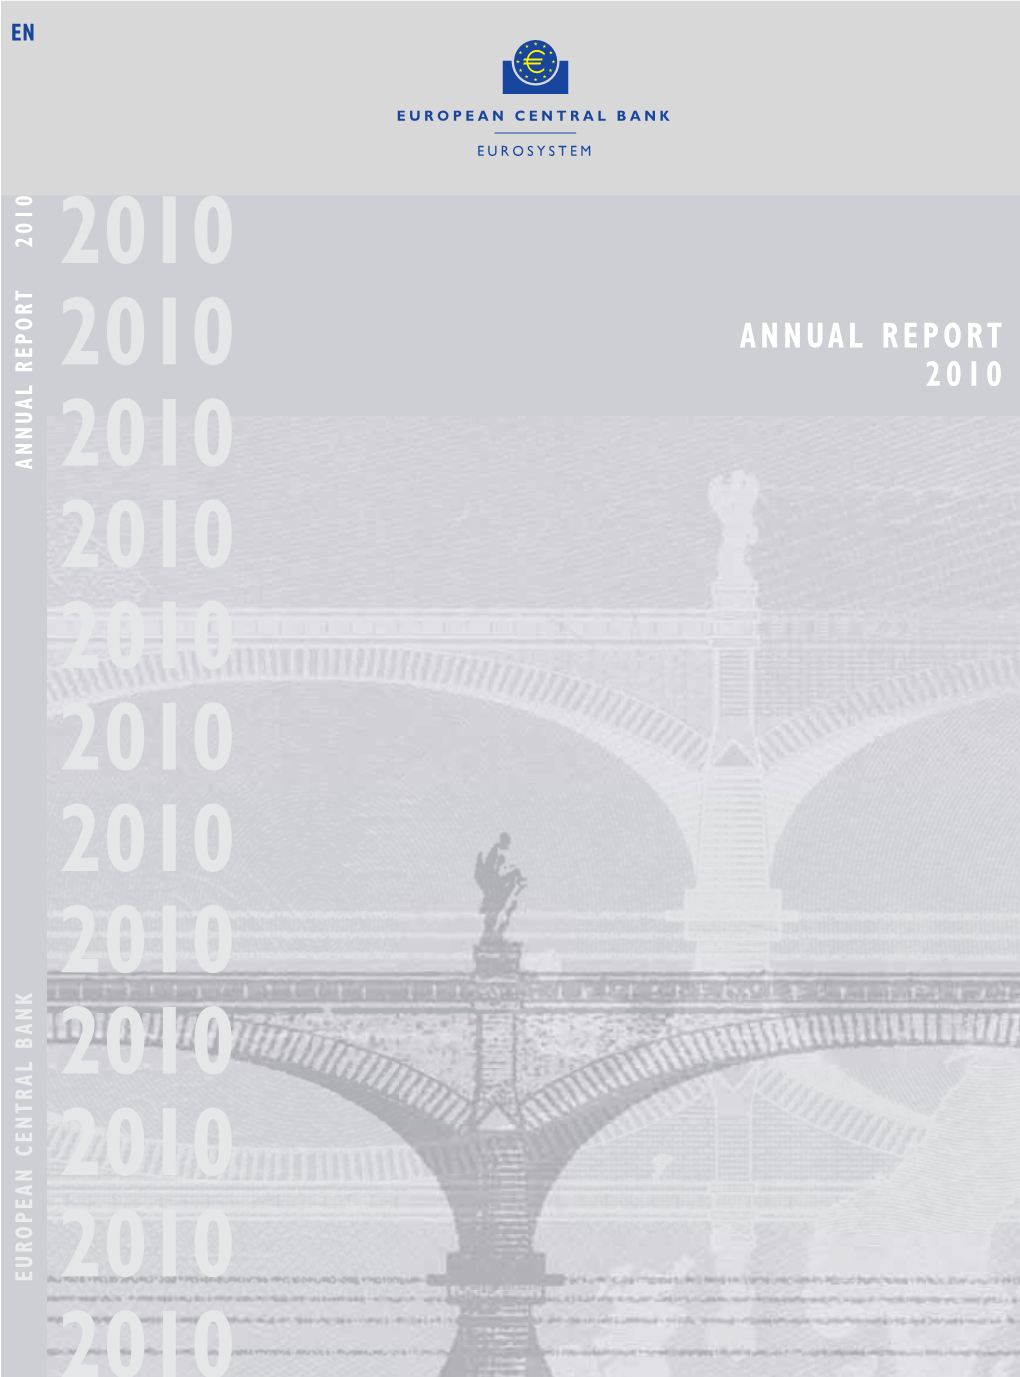 Annual Report 2010 2010 2010 2010 2010 2010 2010